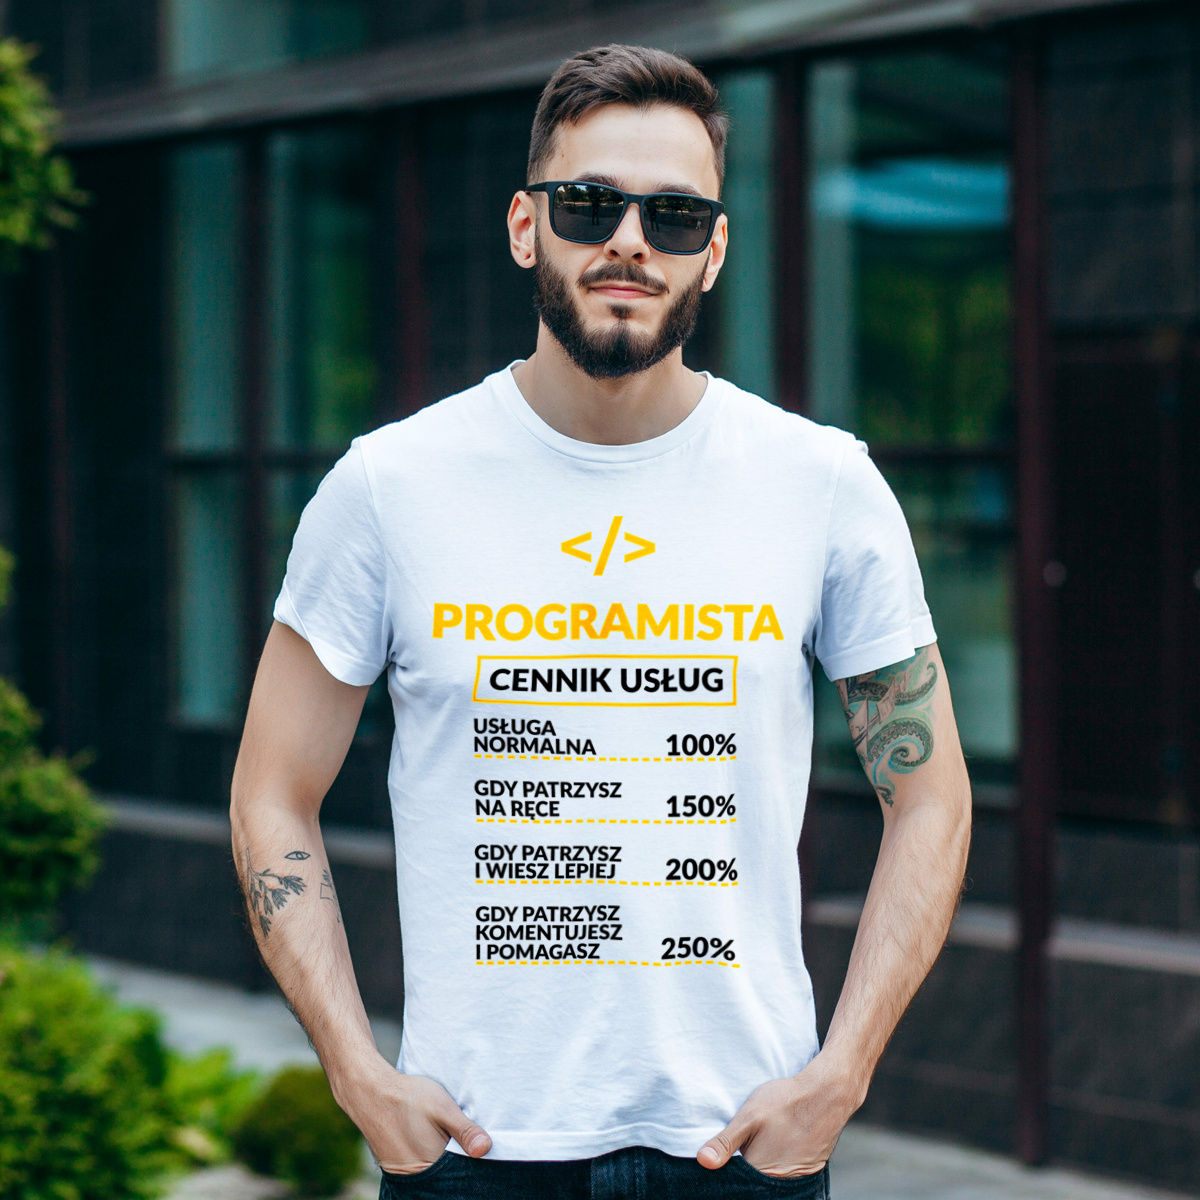 Programista - Cennik Usług - Męska Koszulka Biała